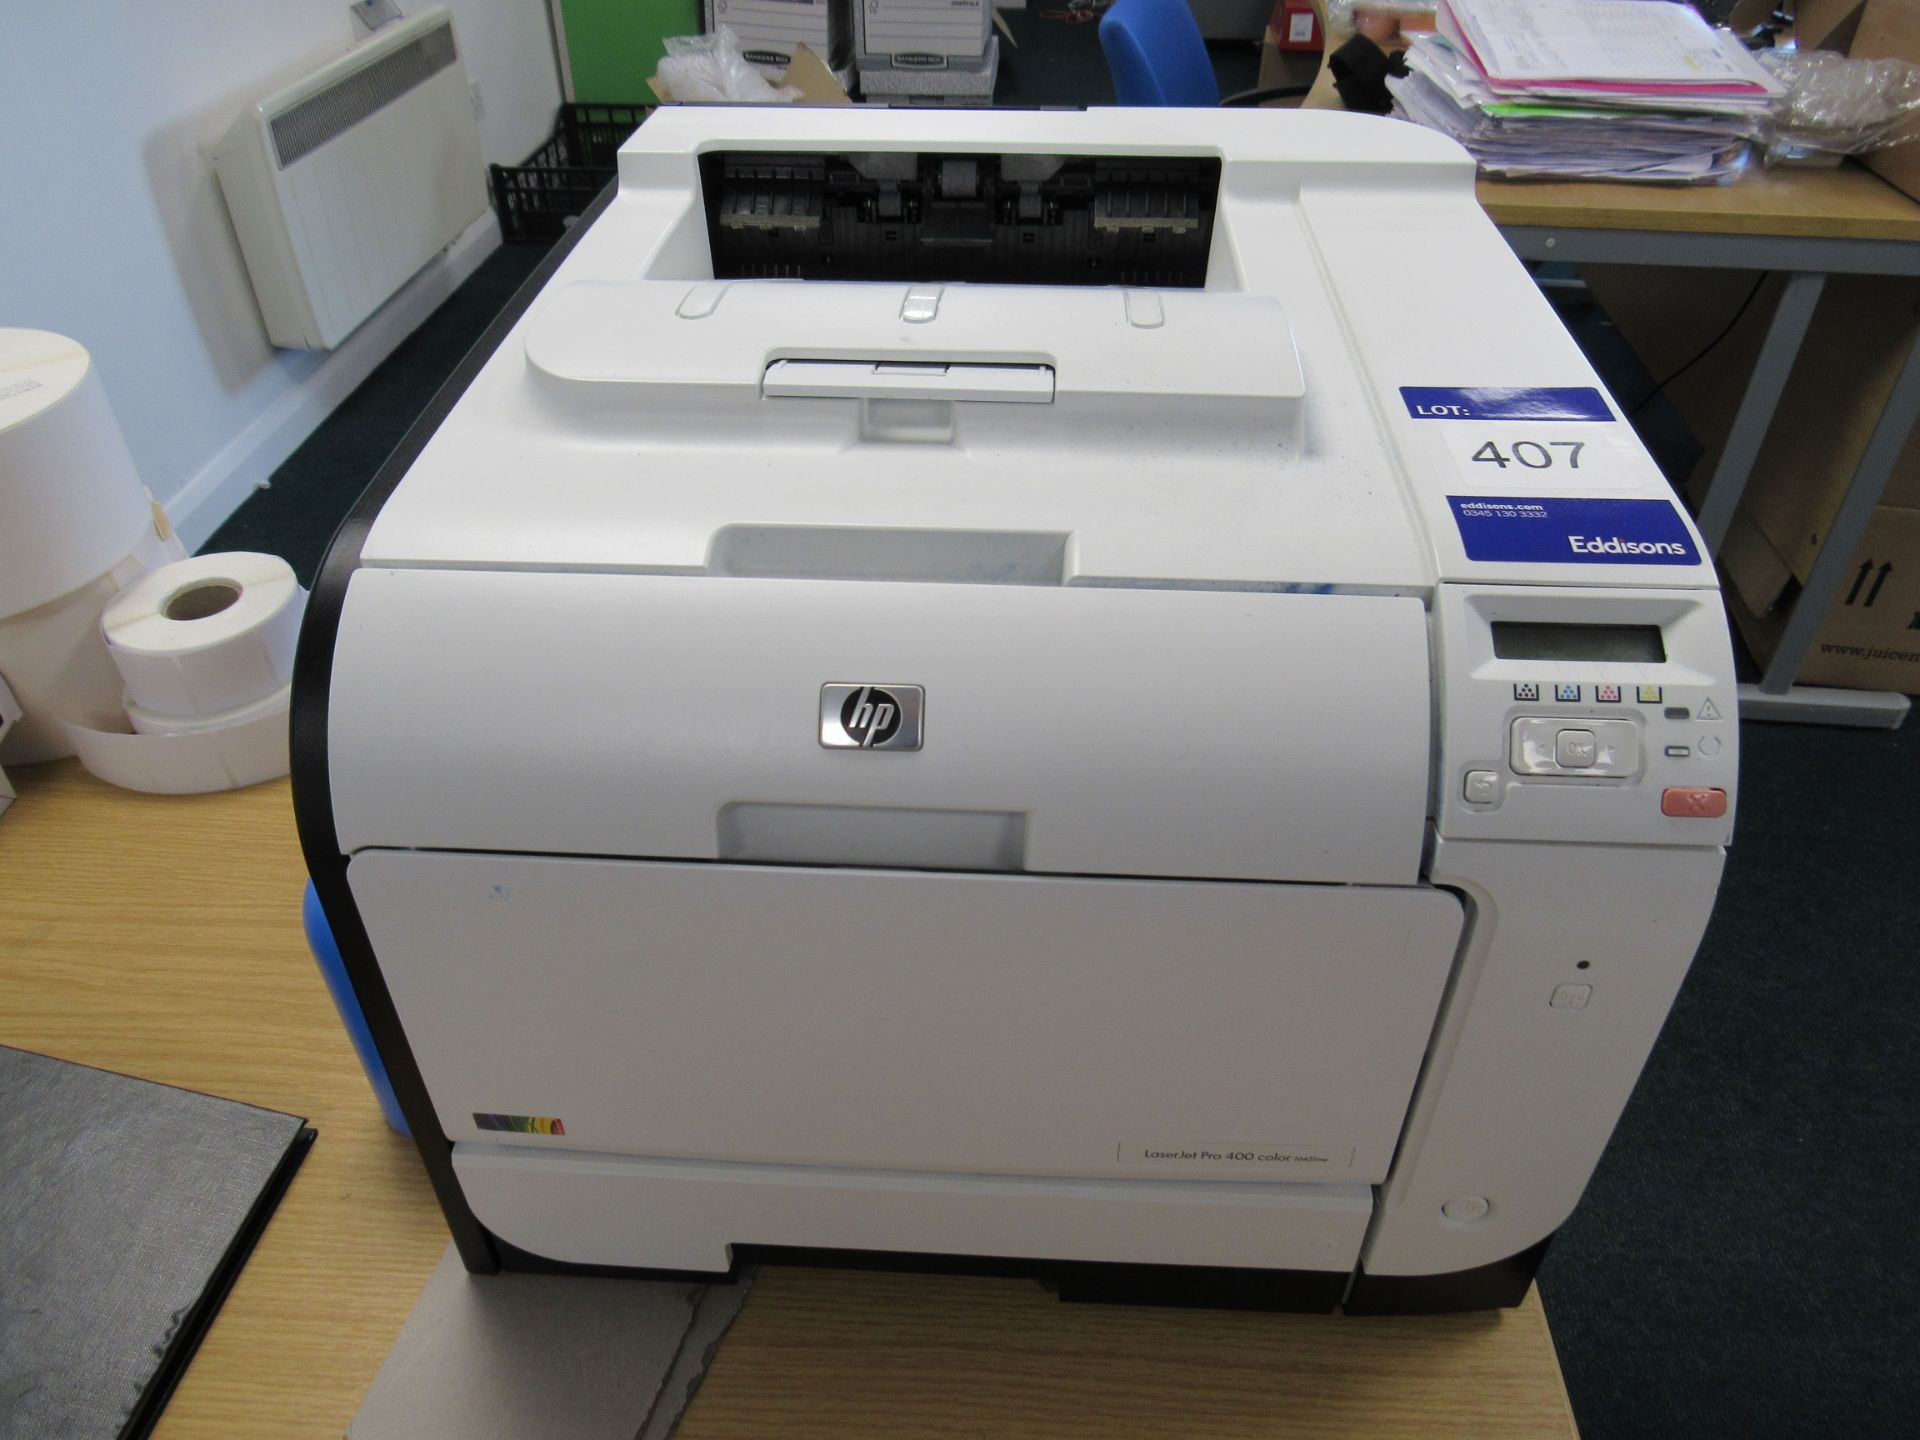 HP Laserjet Pro 400 Color M451NW printer